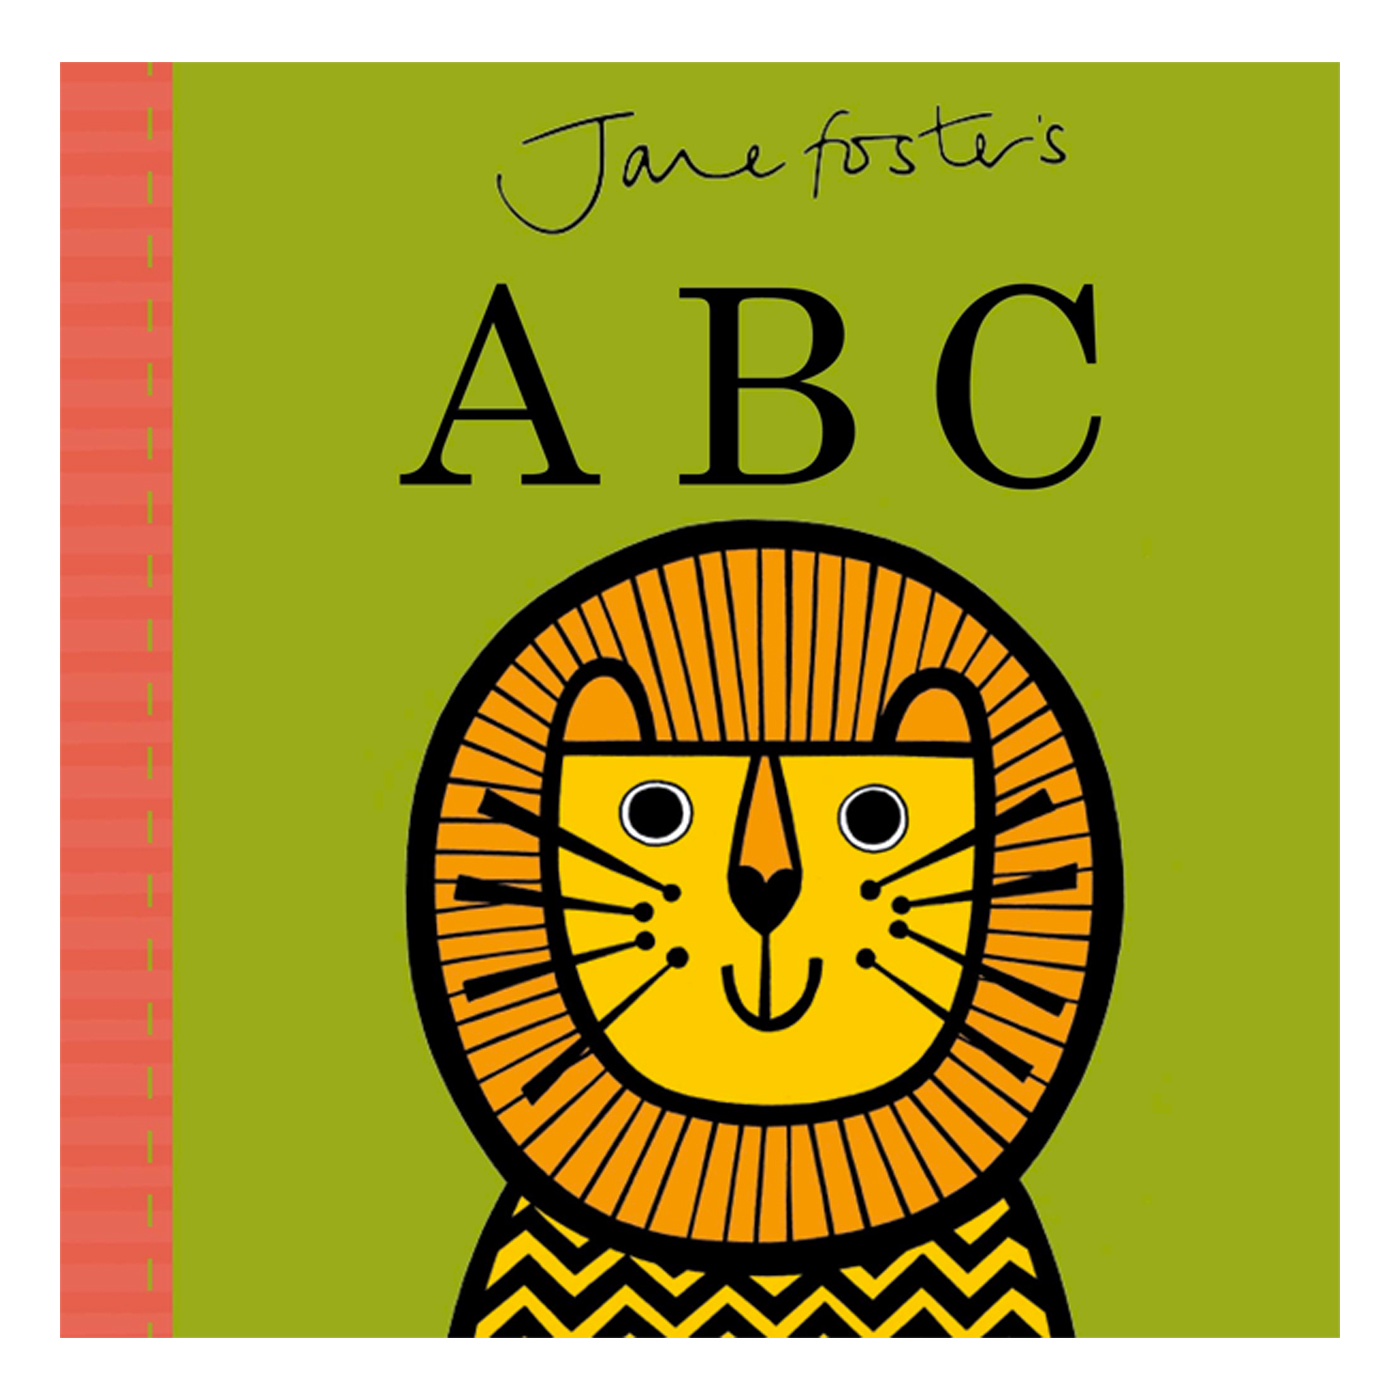  Jane Foster's ABC